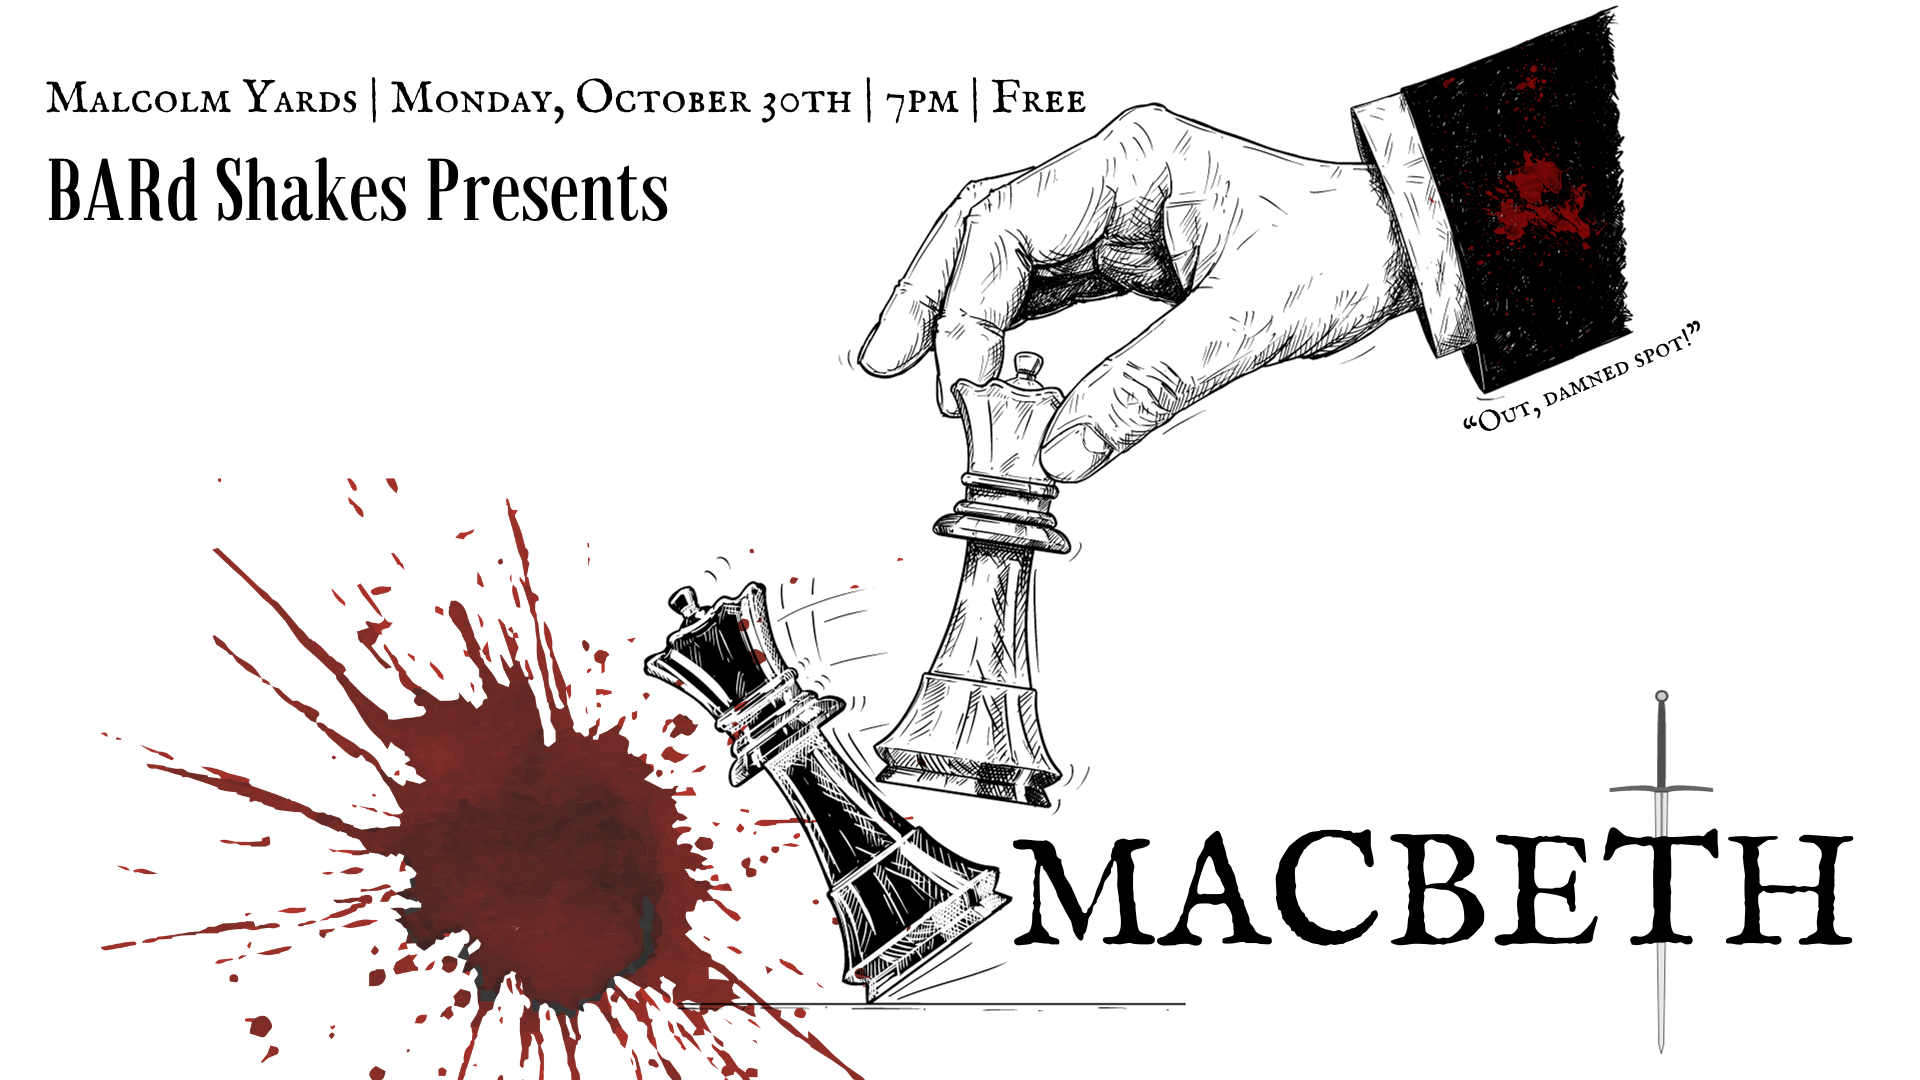 BARd Shakes: Macbeth - The Market at Malcolm Yards